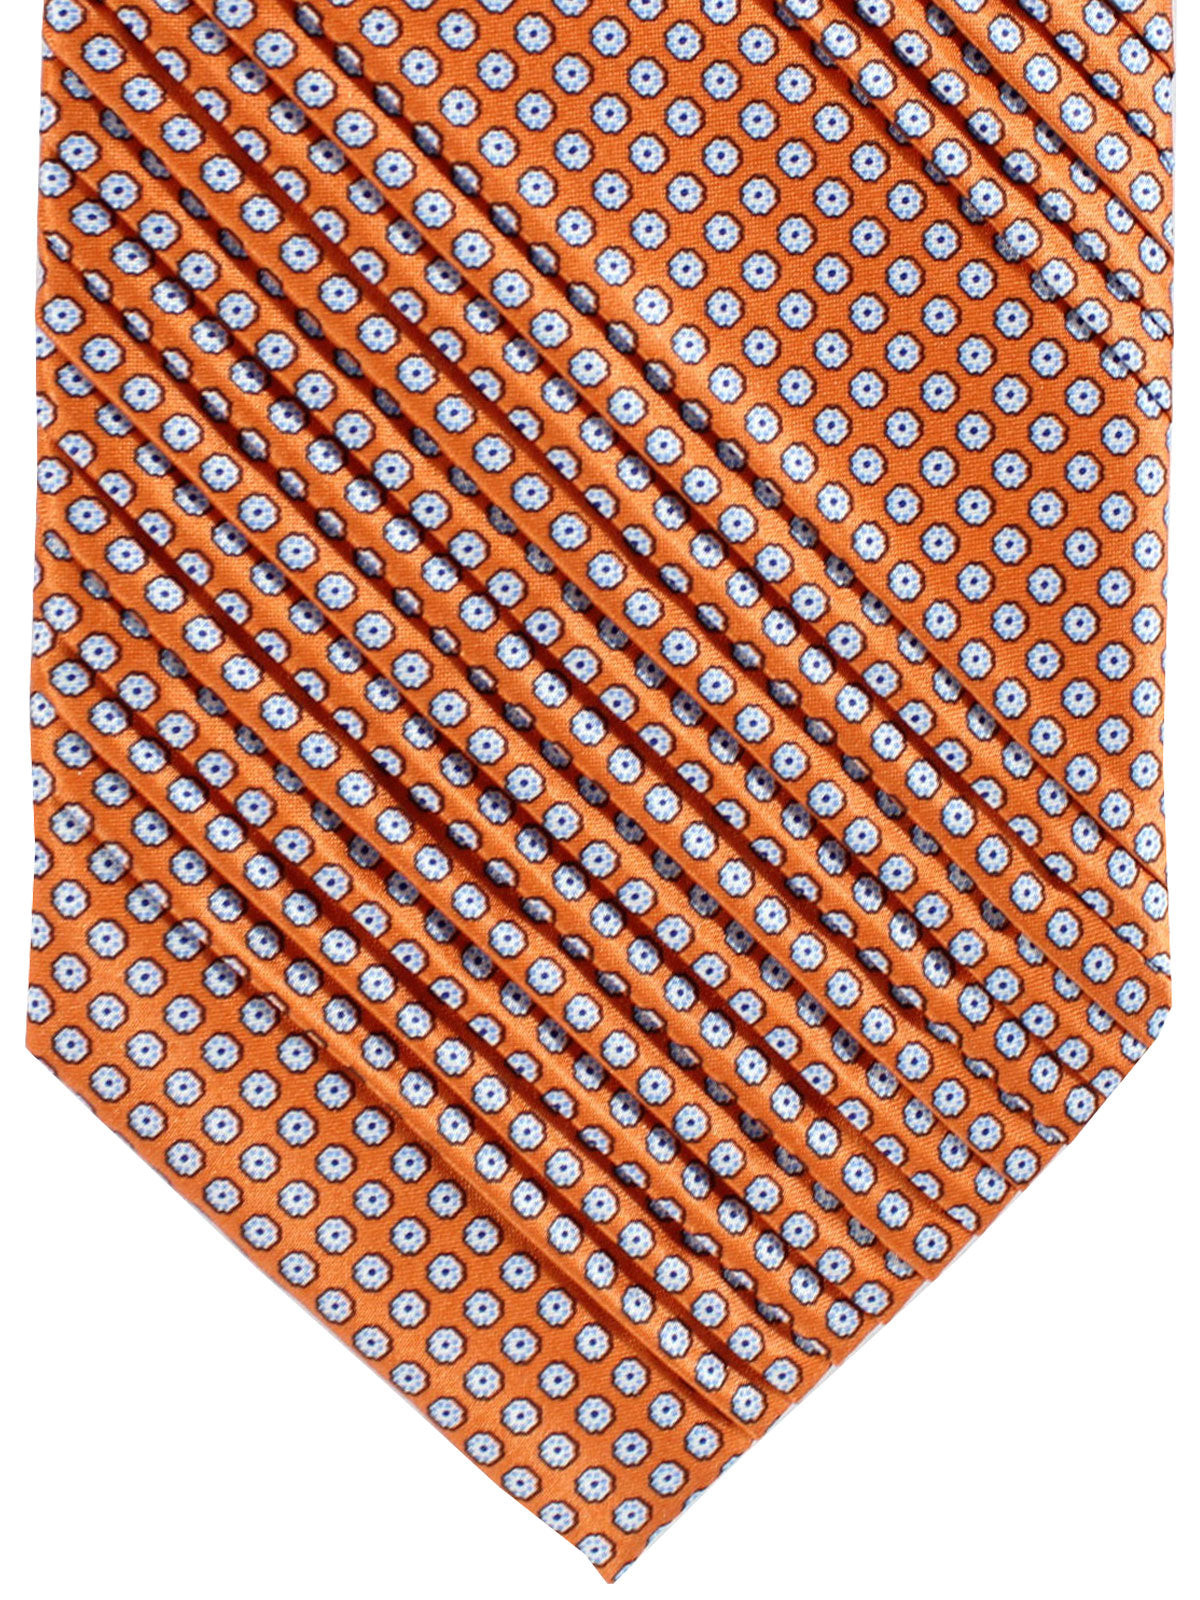 Stefano Ricci Tie Orange Geometric - Pleated Silk